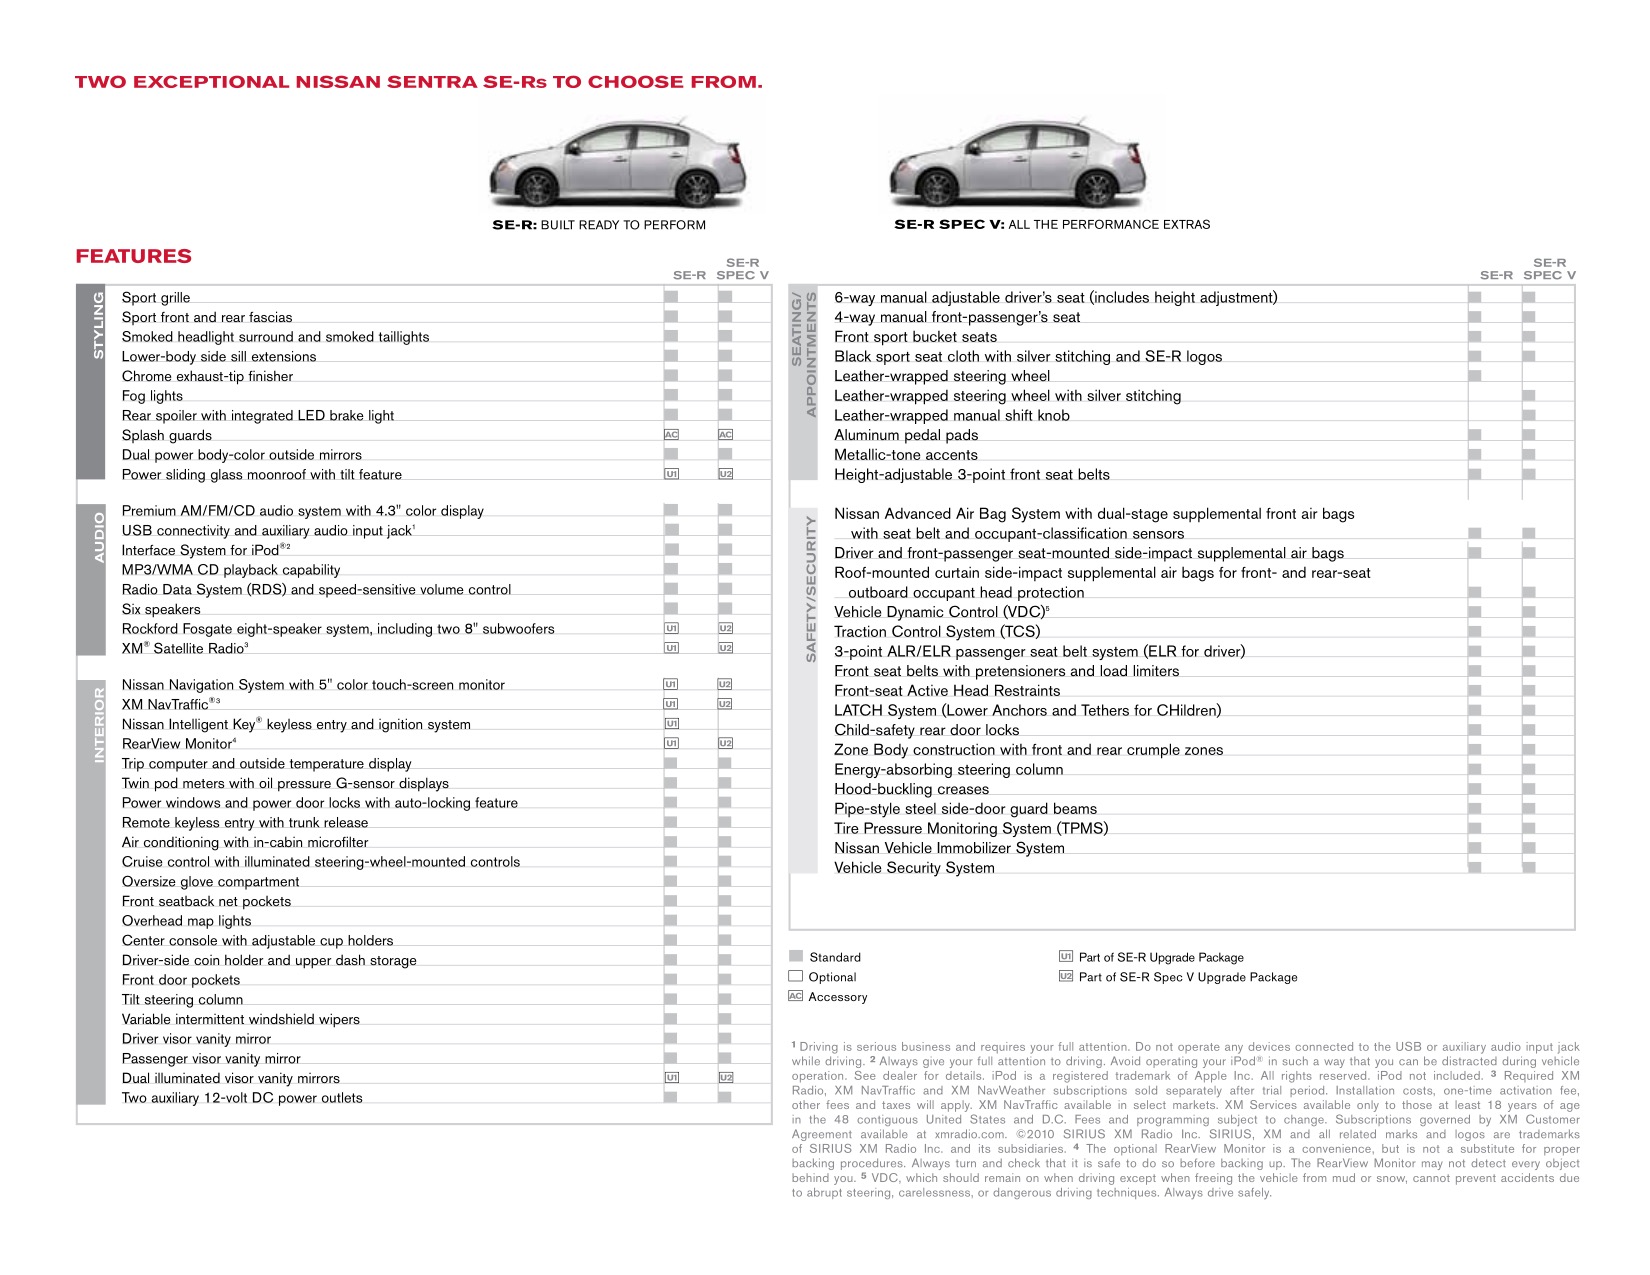 2011 Nissan Sentra Brochure Page 2